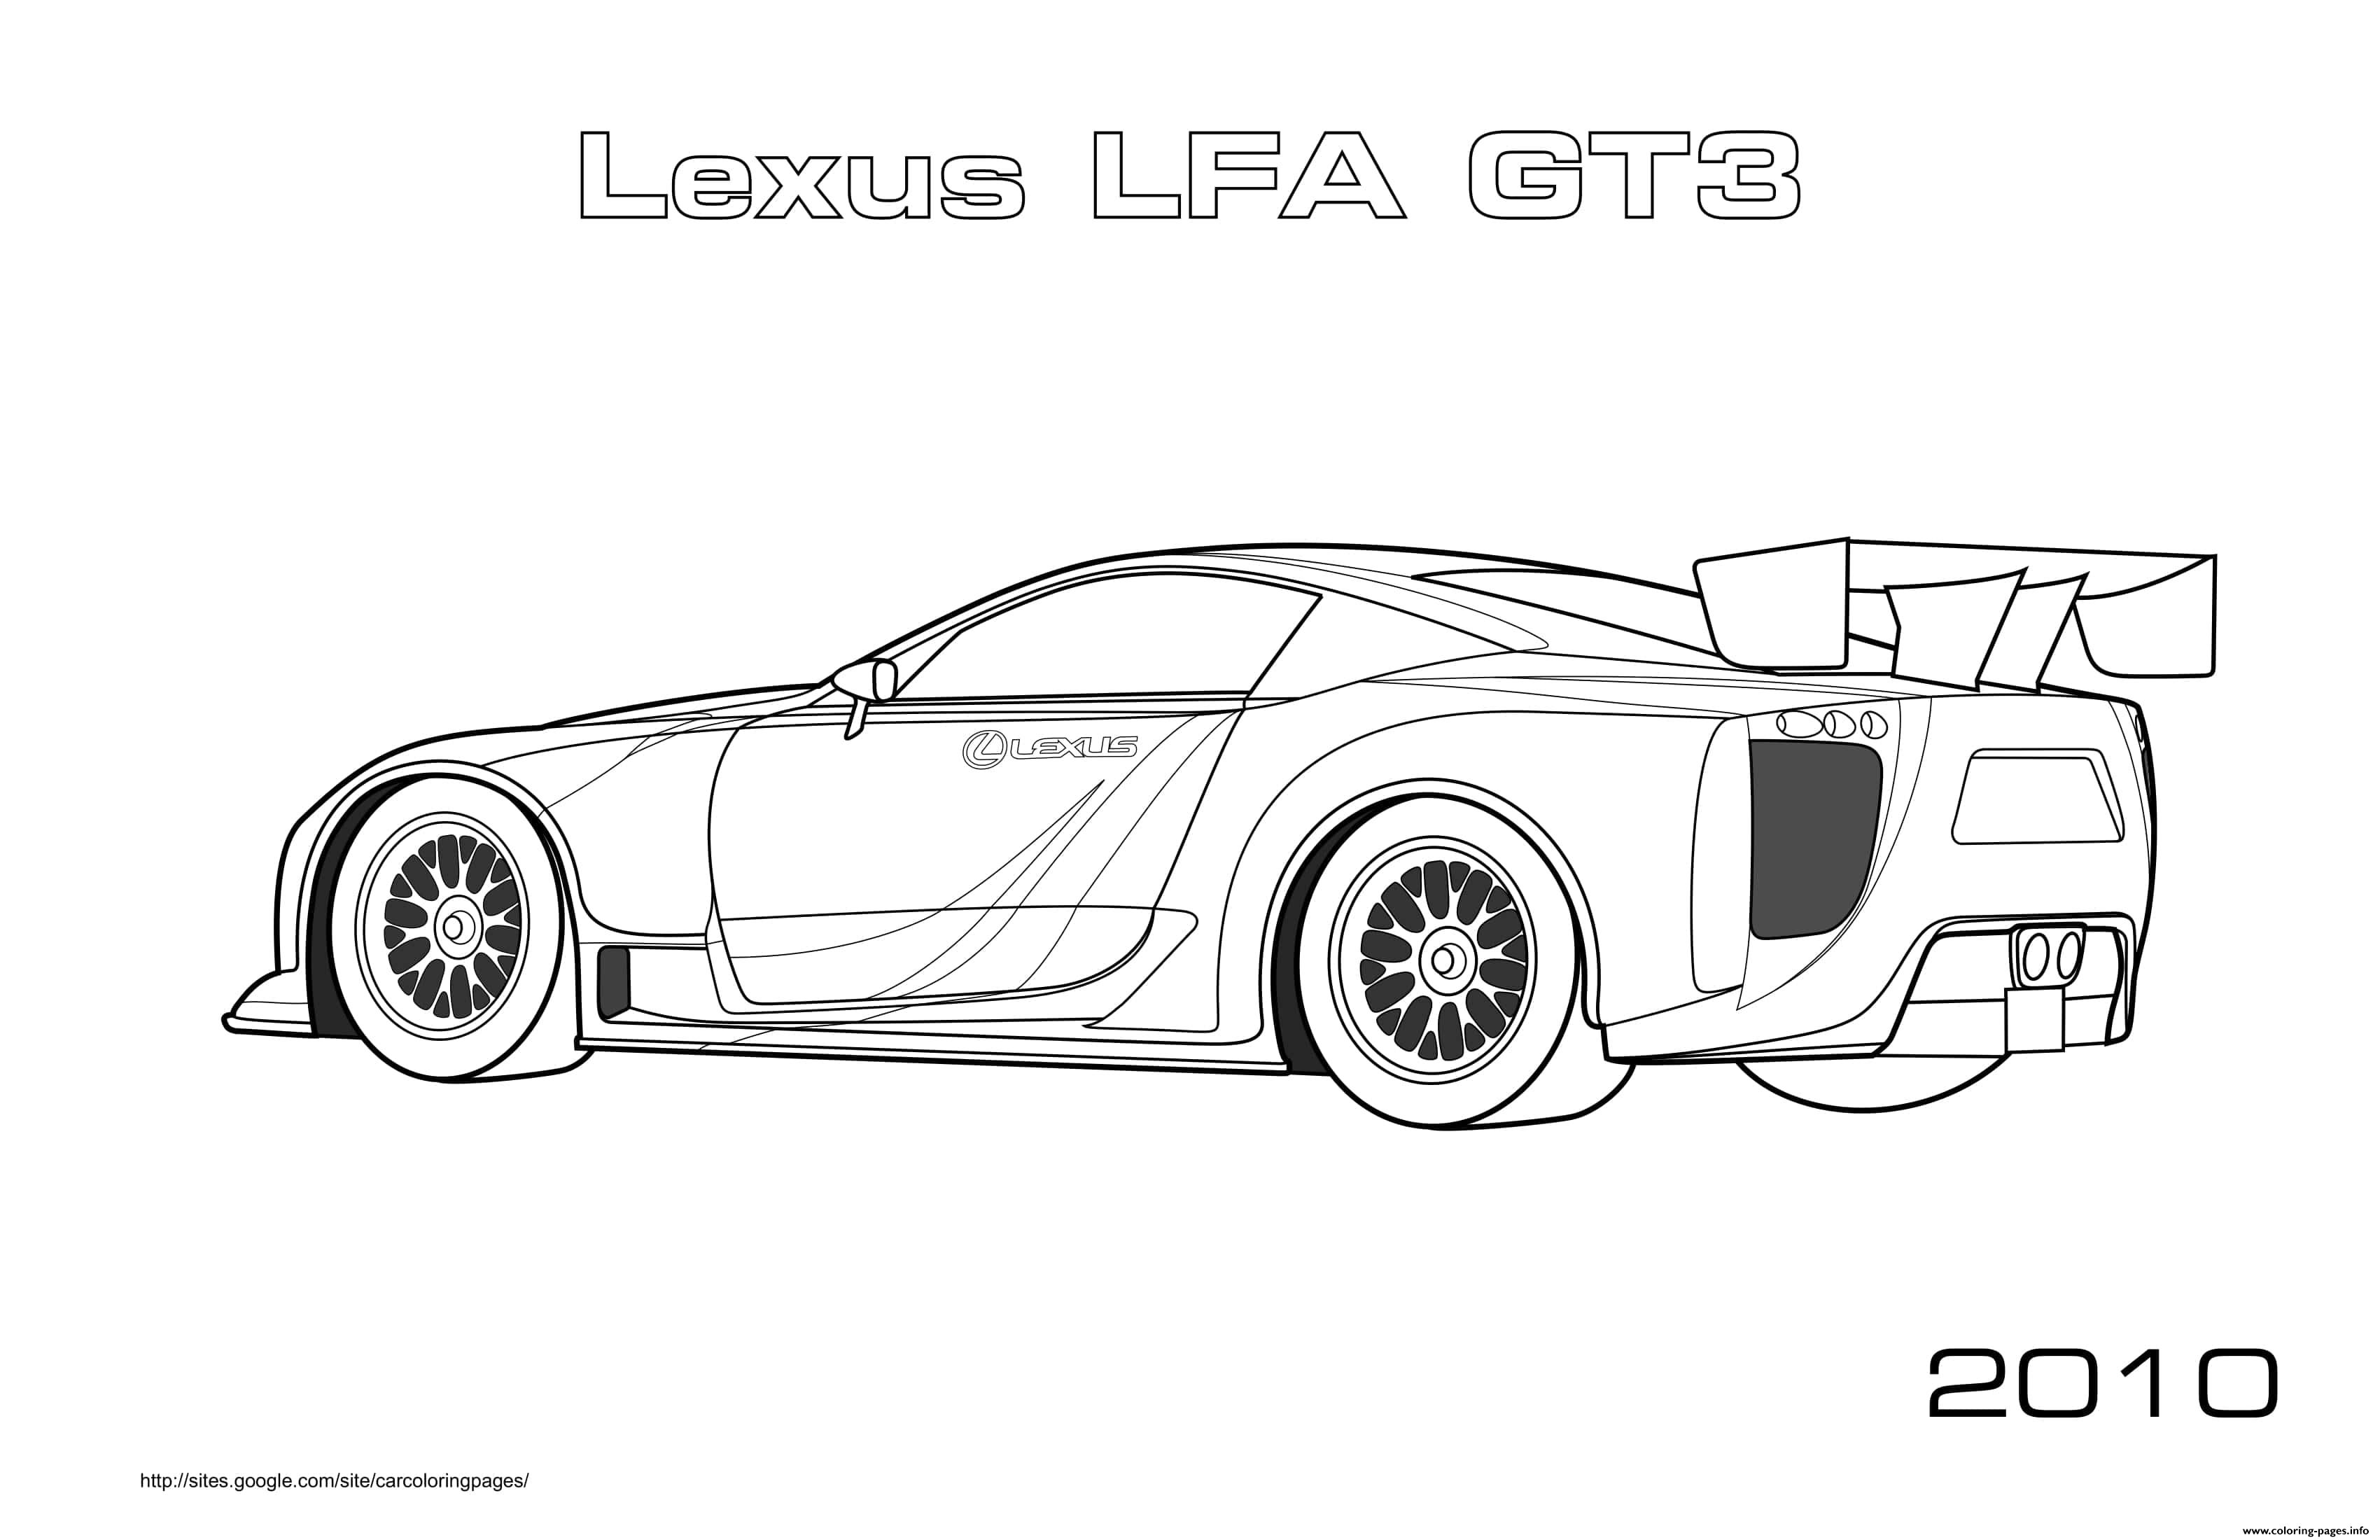 Lexus Lfa Gt3 2010 coloring